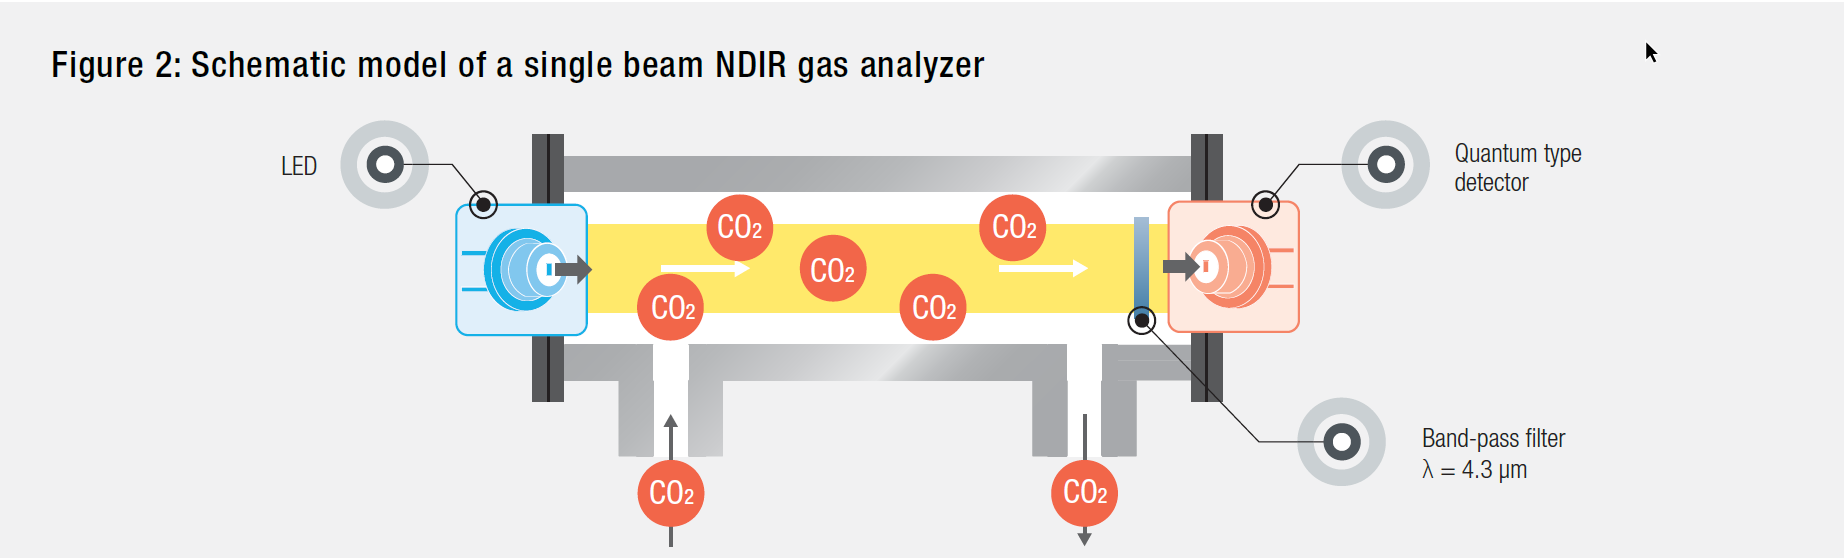 Figure 2: Schematic model of a single beam NDIR gas analyzer